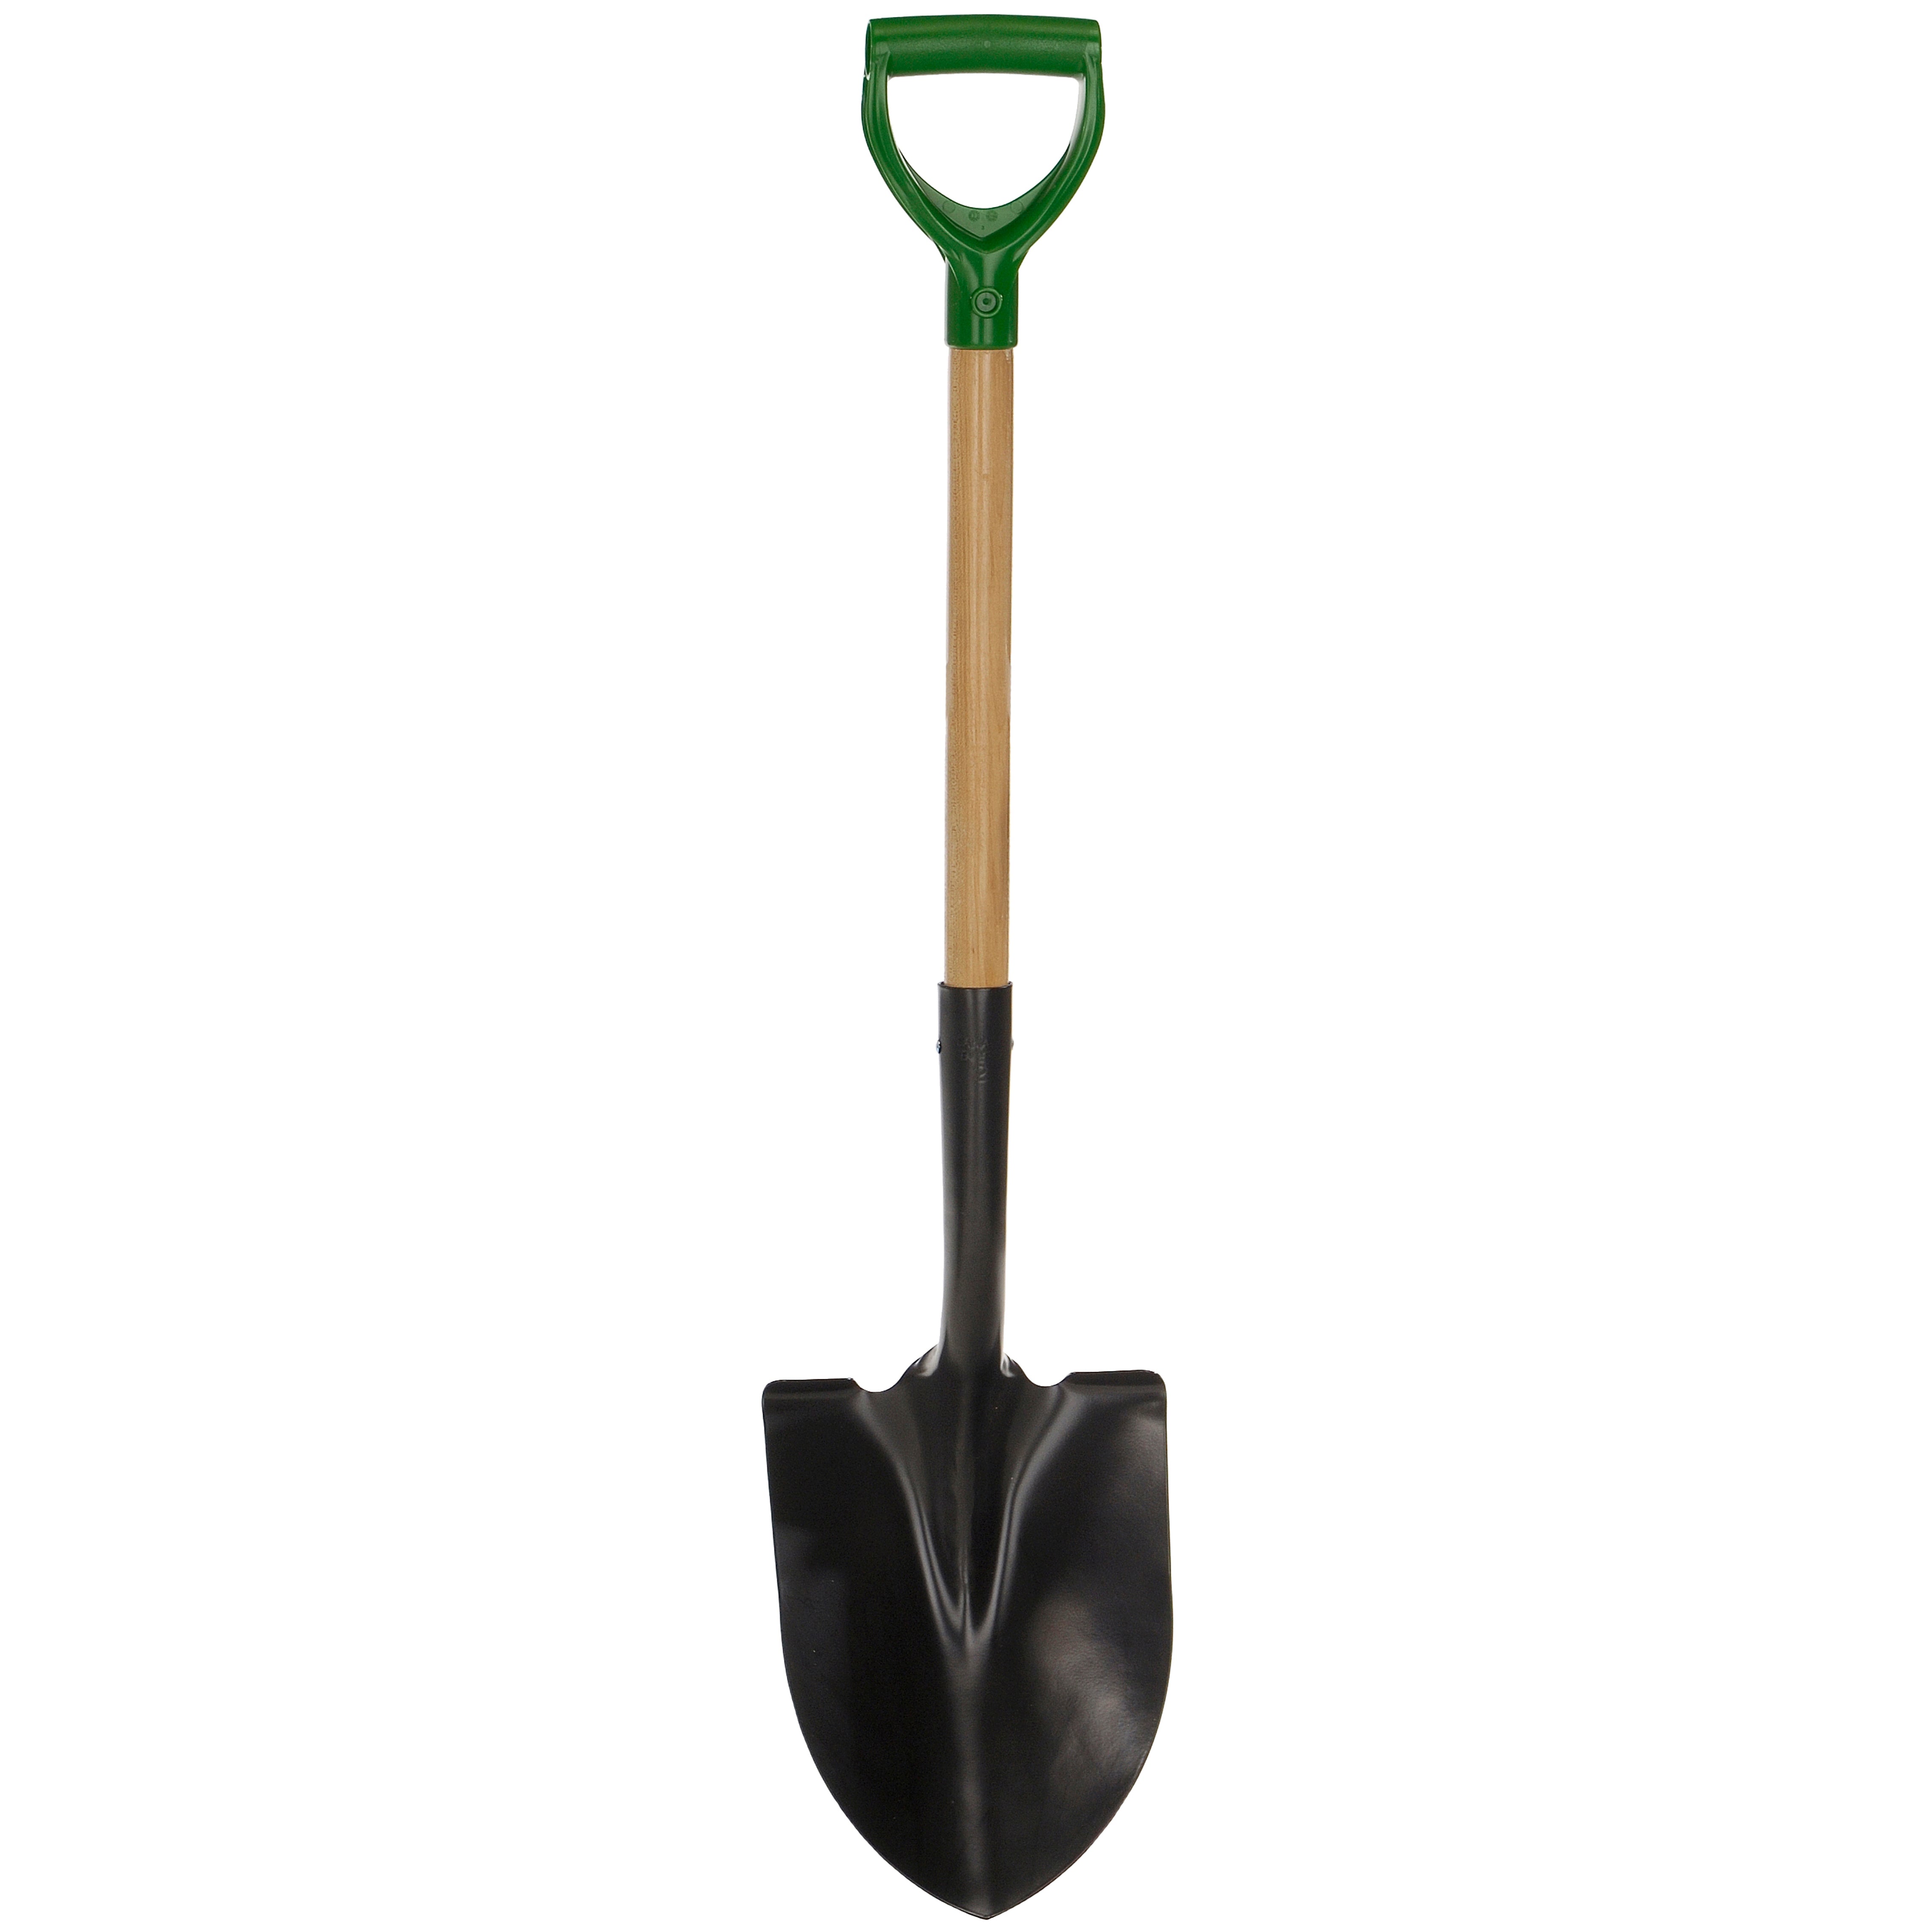 Round point shovel, wood handle, D-grip